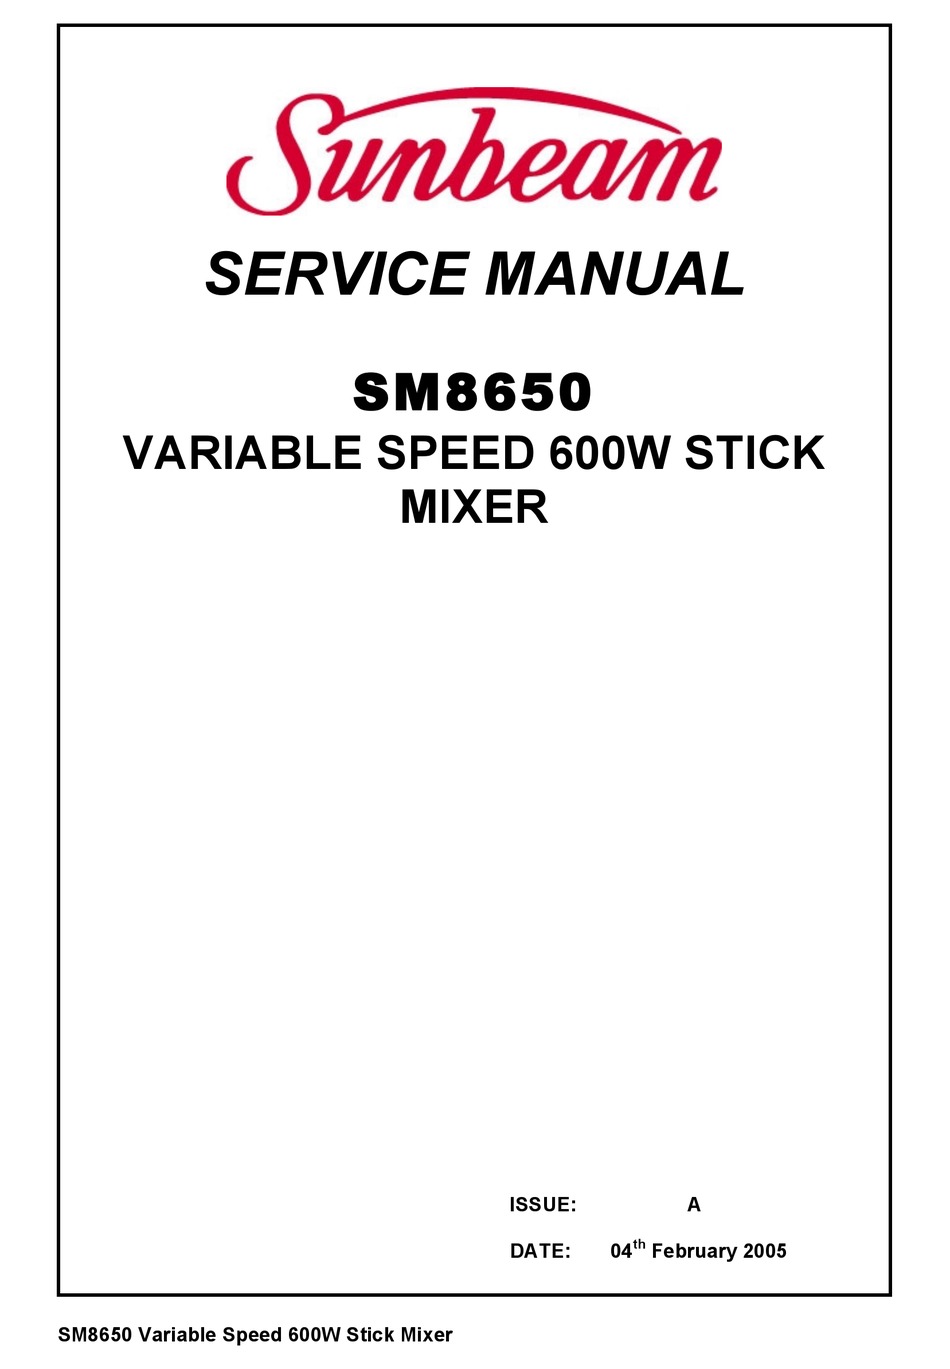 Parts for Sunbeam Stick master SM-8650